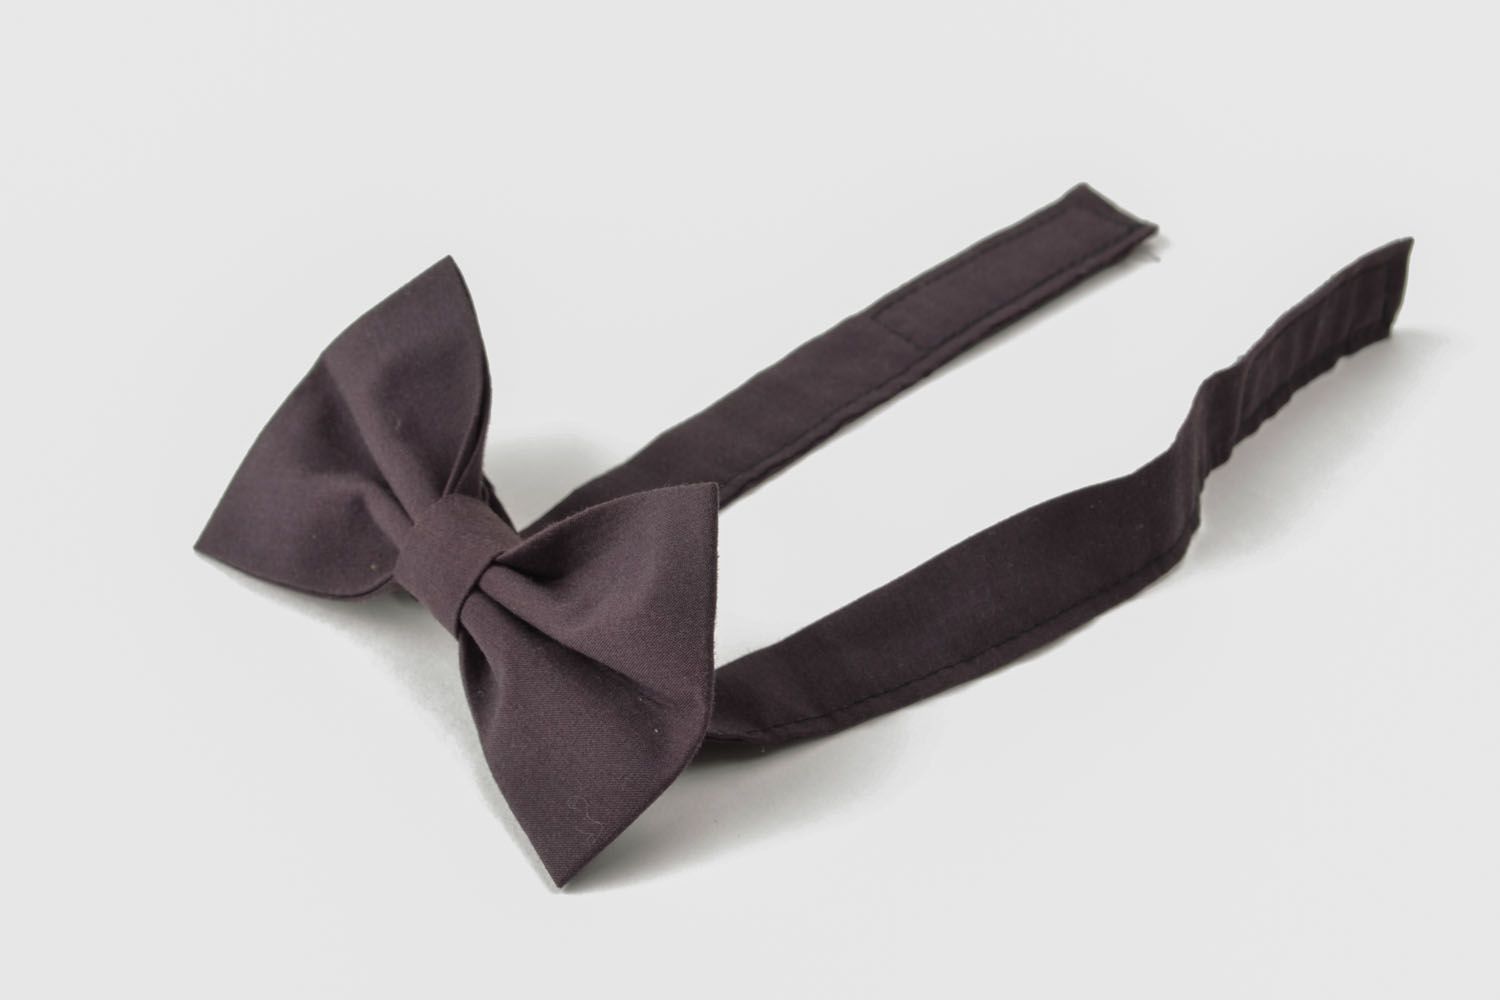 Classic black bow tie photo 3